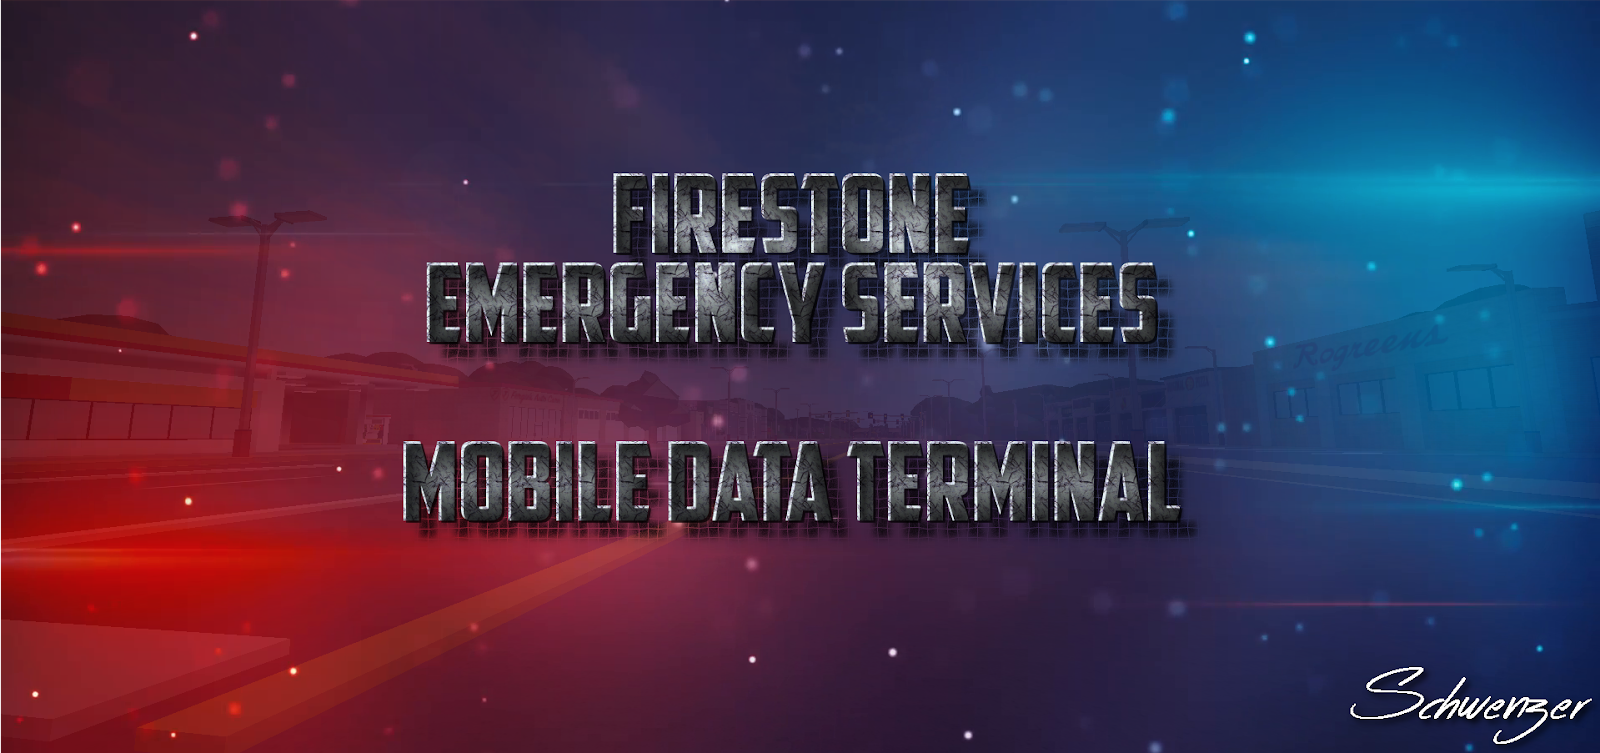 Firestone Emergency Services Mobile Data Terminal Mdt Shutdown